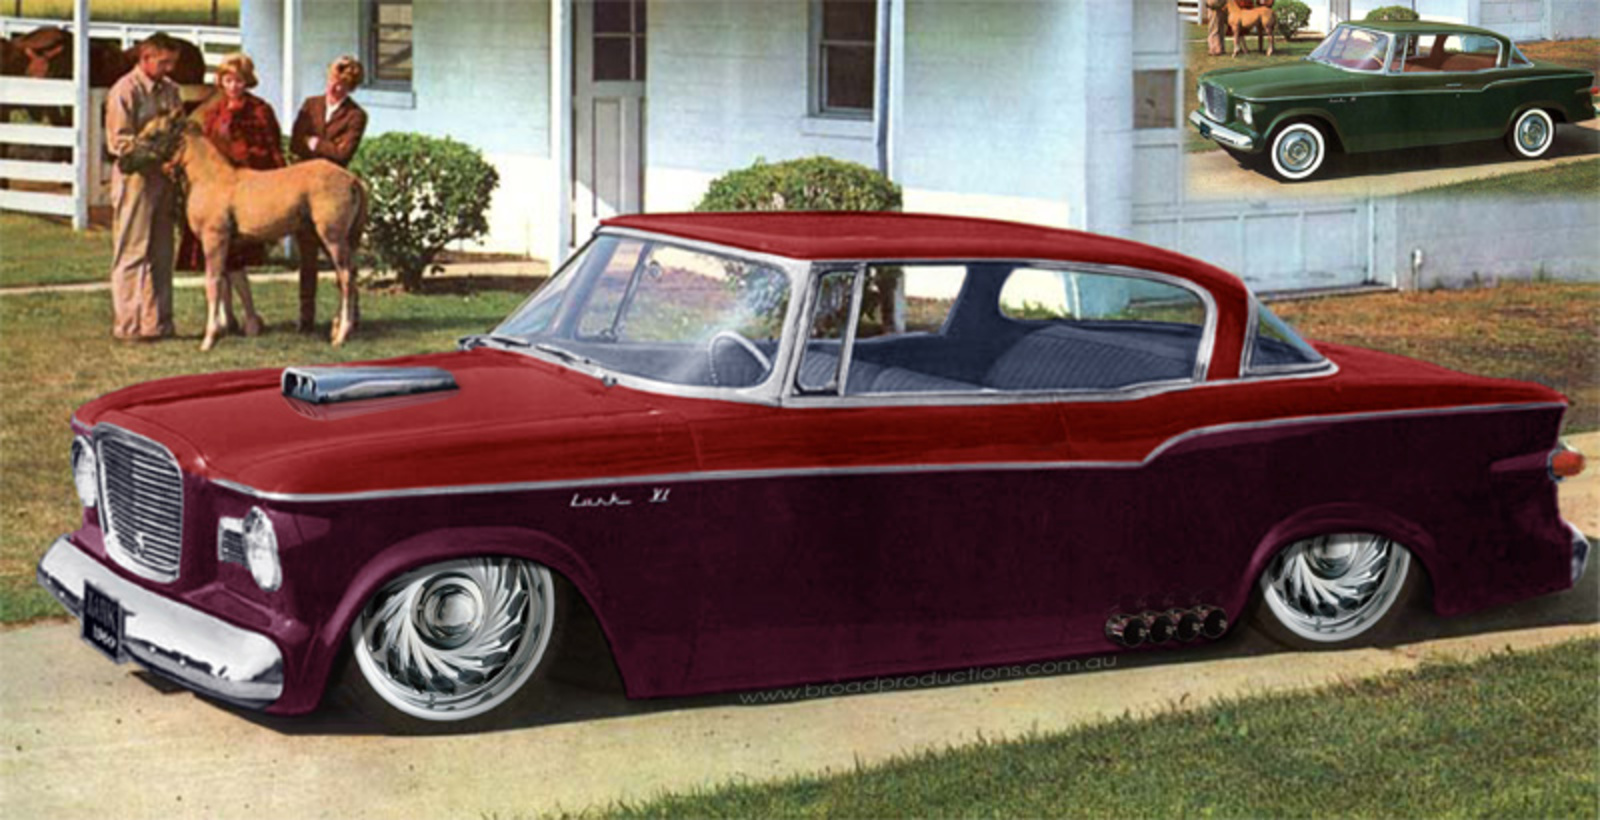 1960 Studebaker Lark Vi - Photoshopchop.